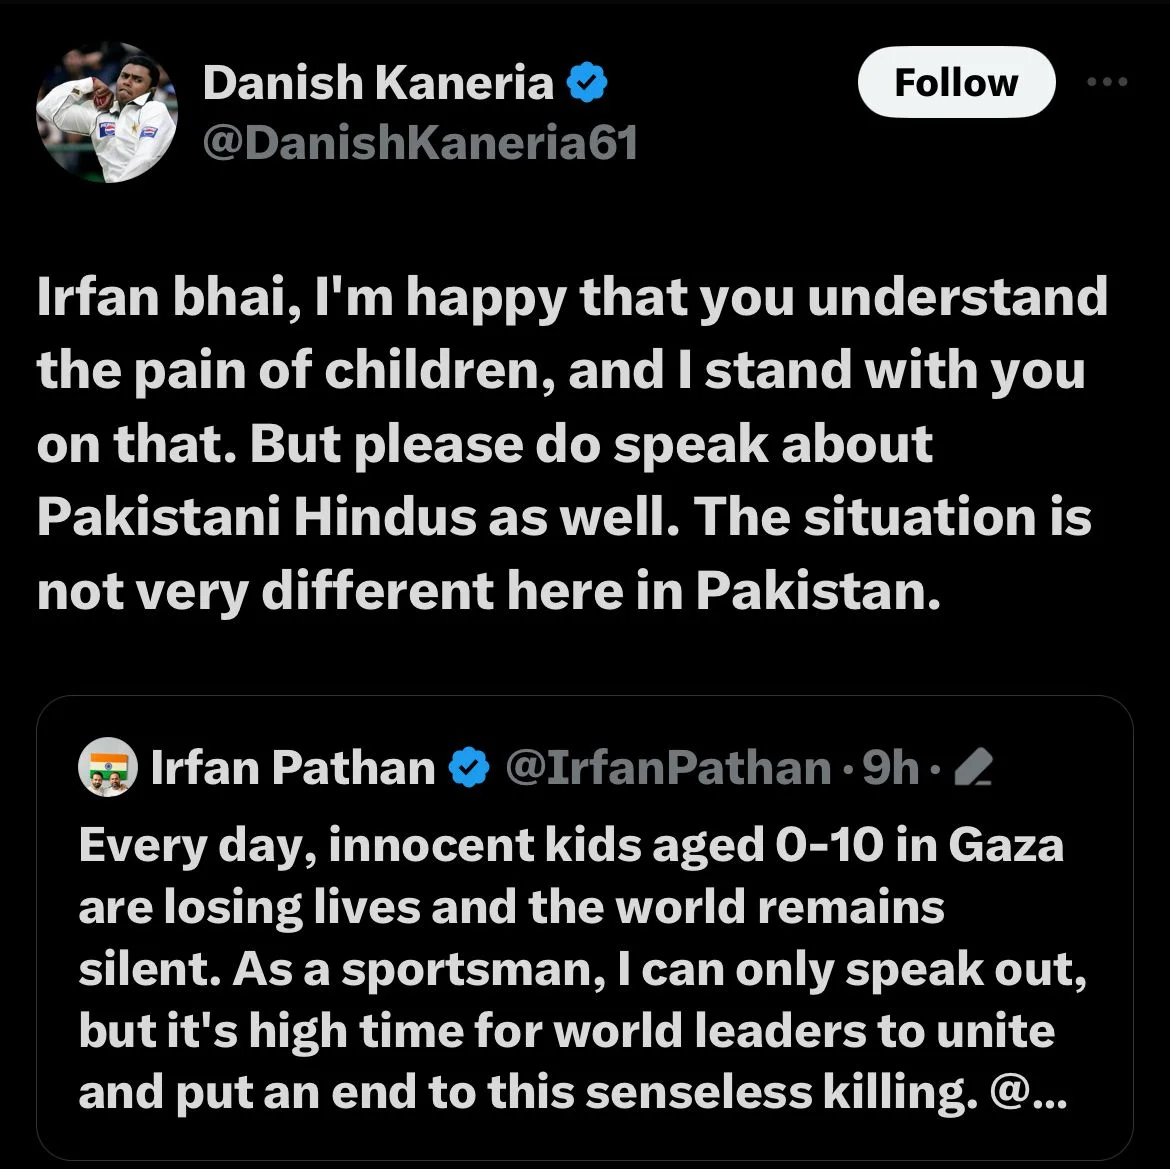 Danish Kaneria Gave A Hard-Hitting Reply To Irfan Pathan On His Tweet For Gaza